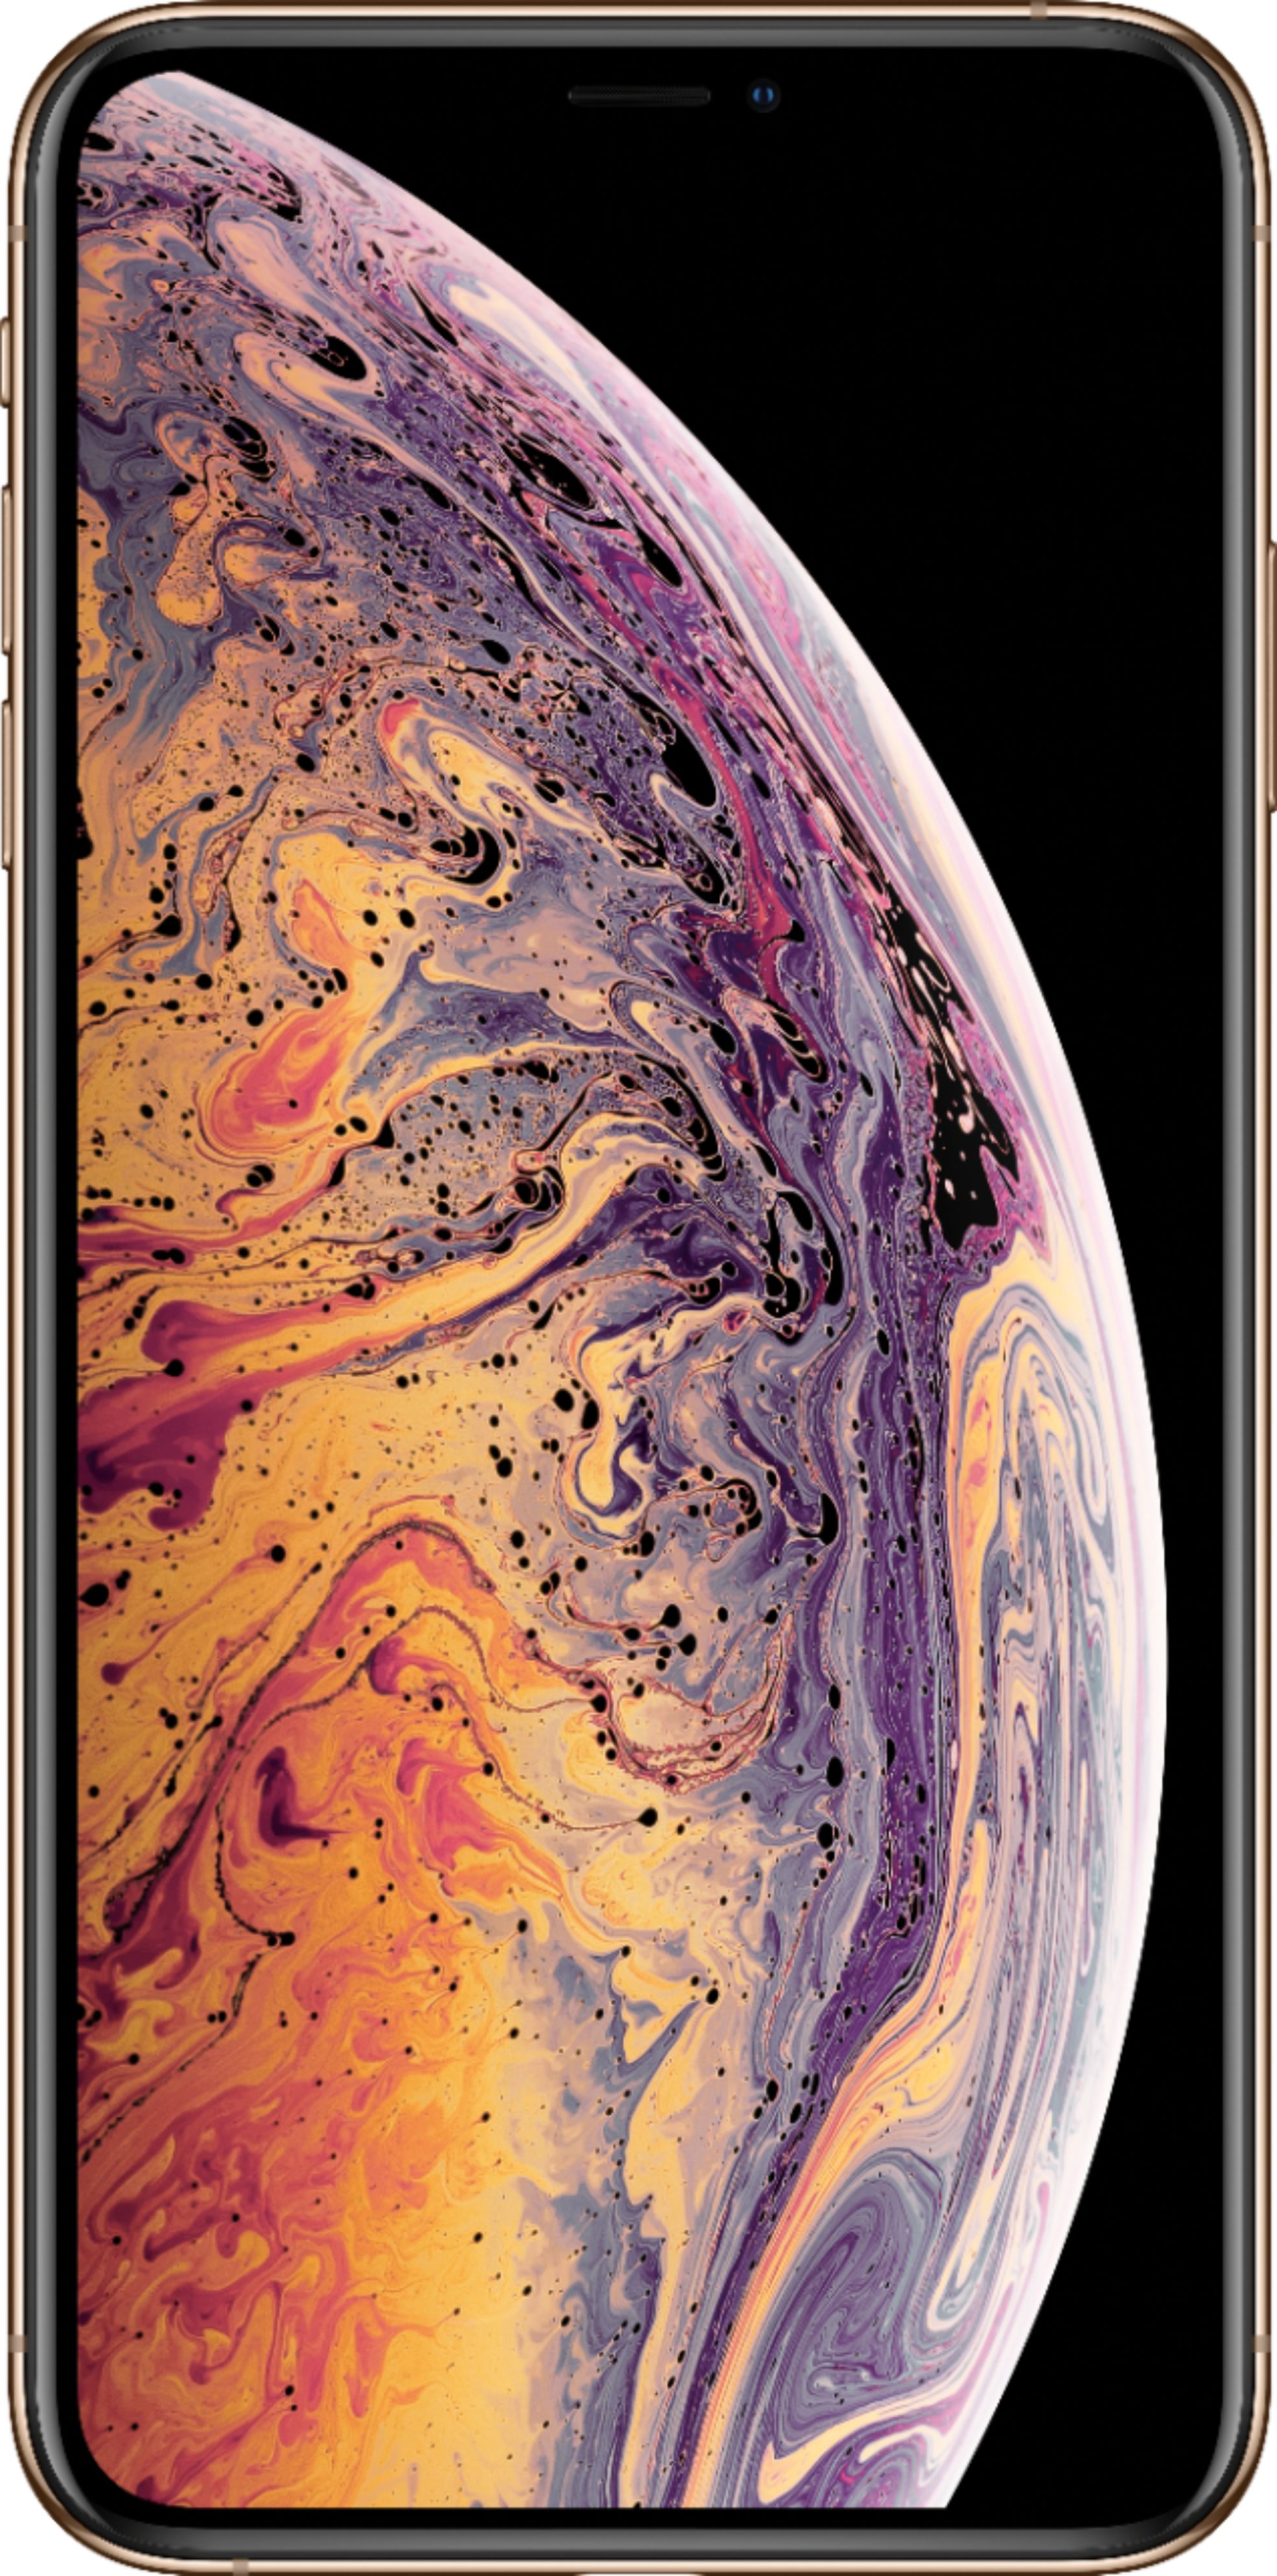 Apple iPhone XS Max 256GB Gold (Sprint) MT5F2LL/A - Best Buy